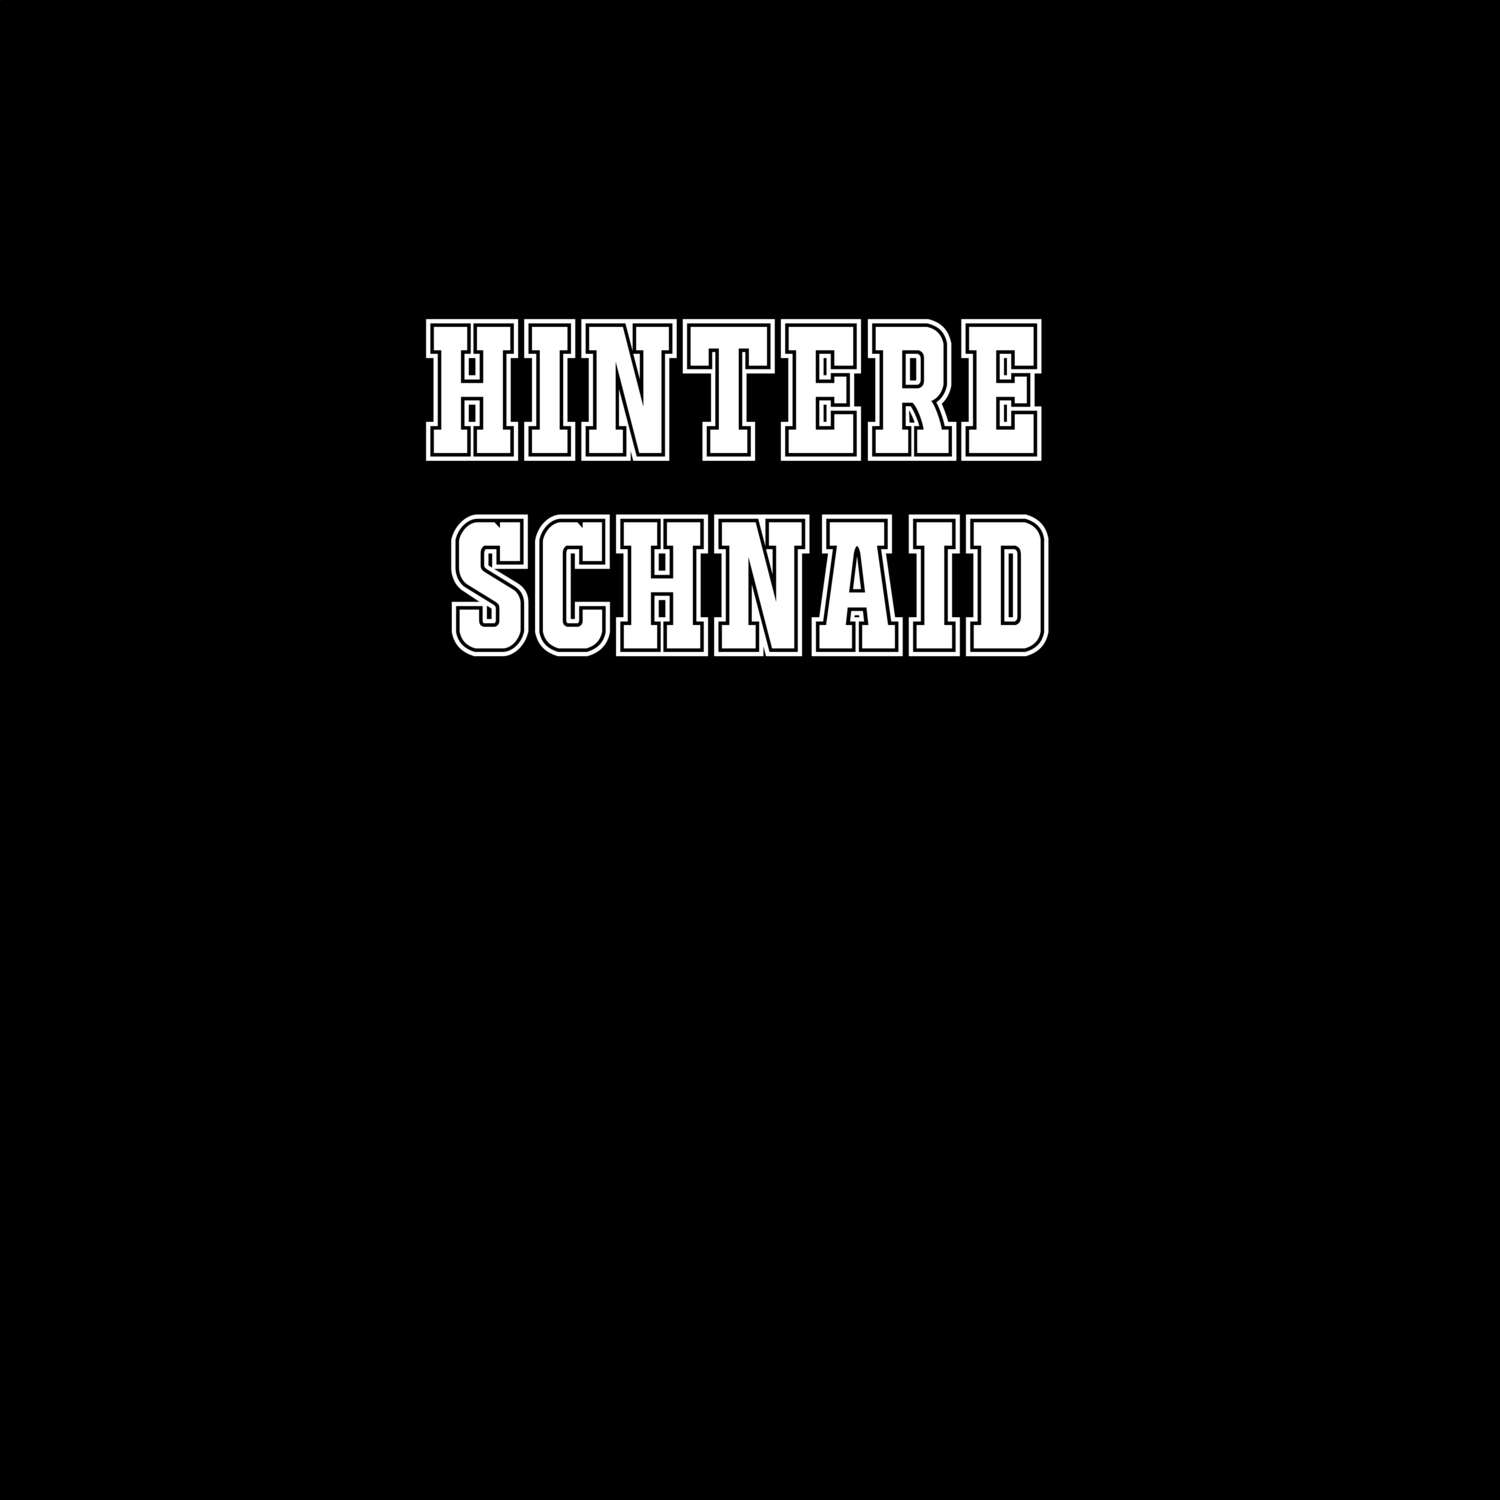 Hintere Schnaid T-Shirt »Classic«